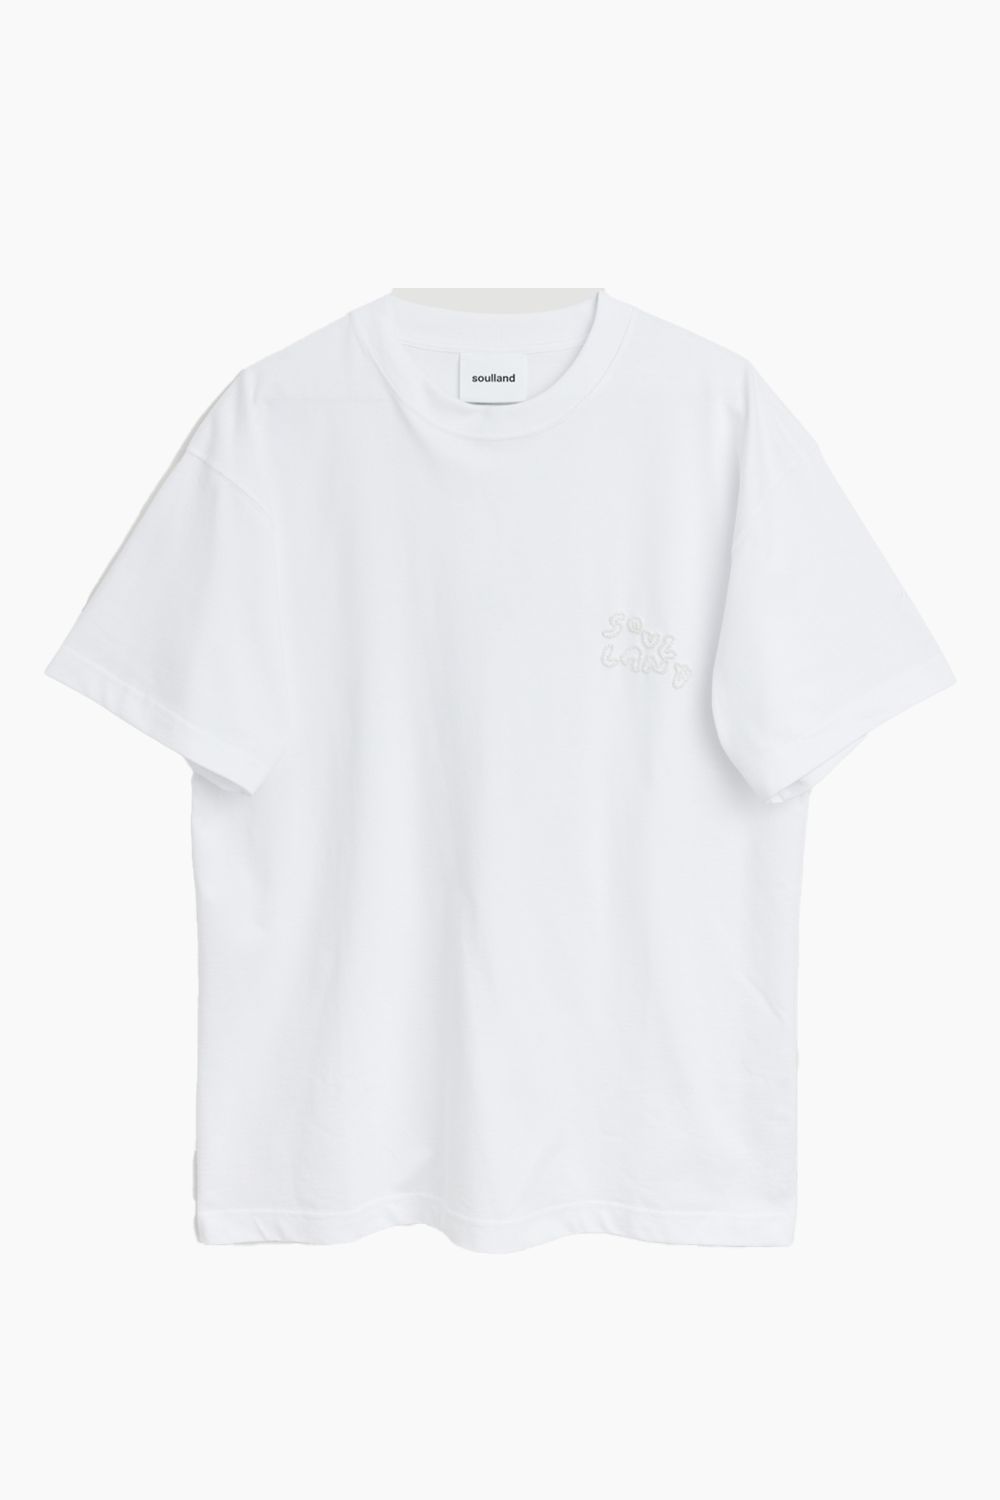 Billede af Kai T-shirt Beaded Logo - White - Soulland - Hvid XXS/XS